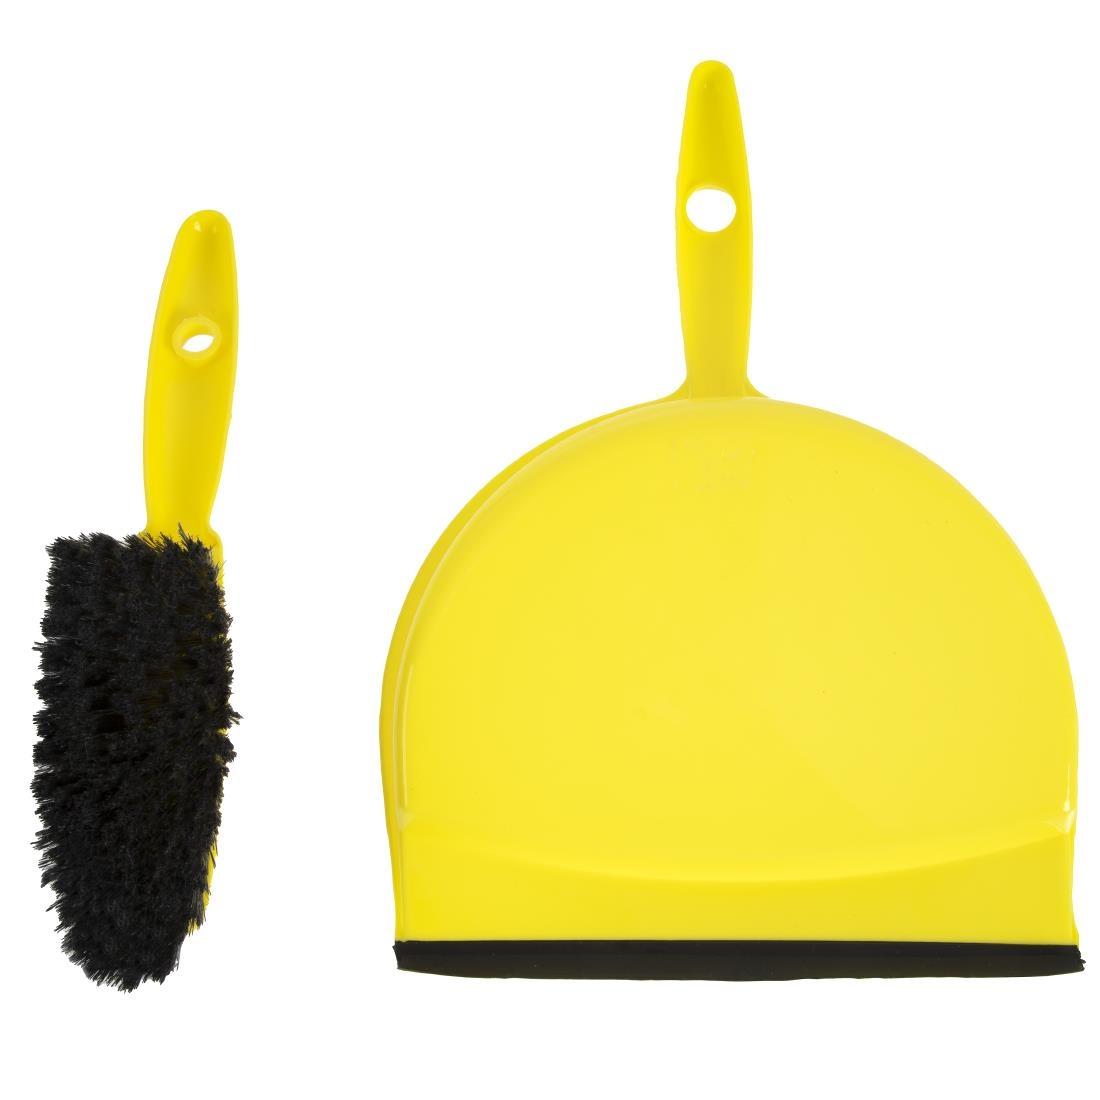 Jantex Soft Dustpan and Brush Set Yellow - CC930  - 4